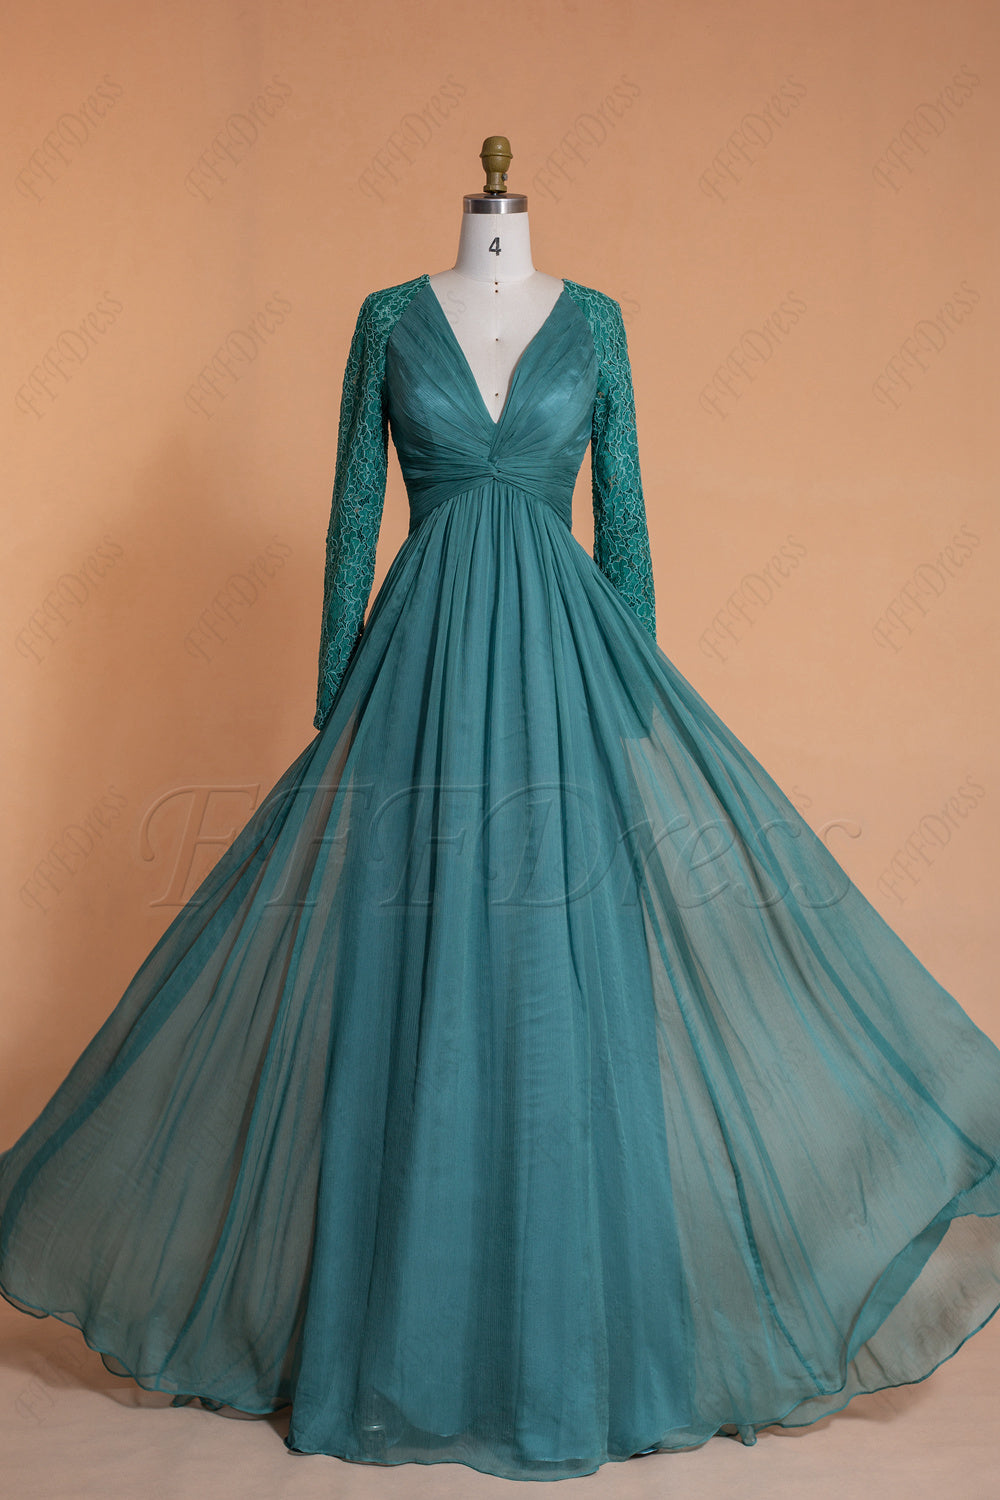 Sea glass green modest bridesmaid dresses long sleeves